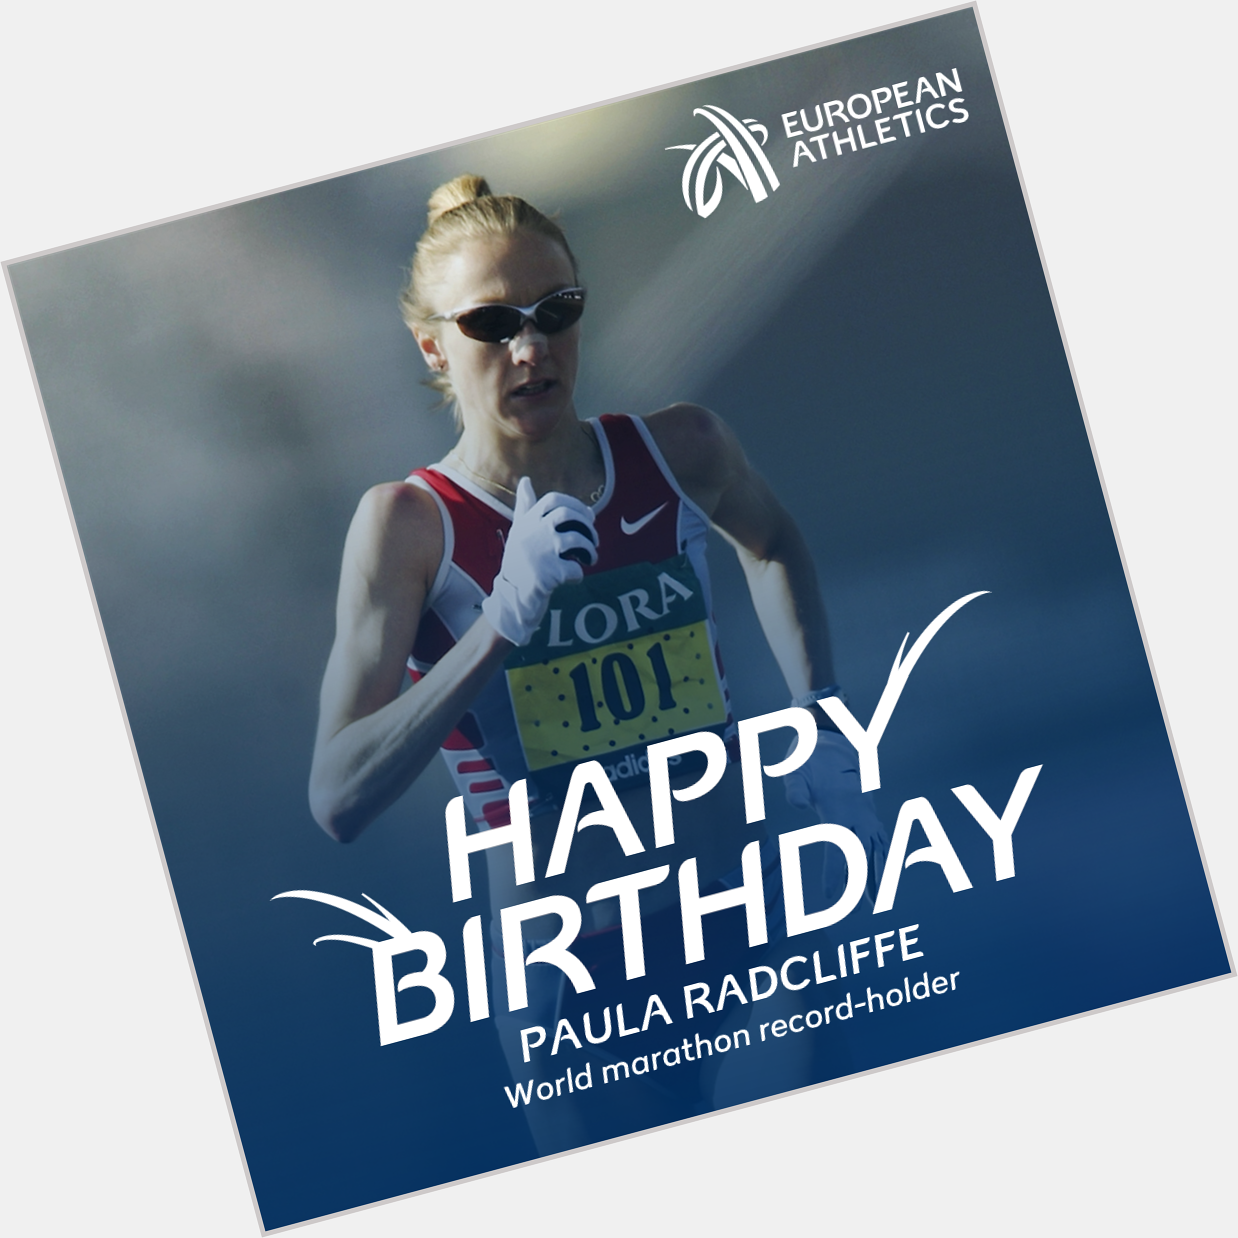 Happy birthday to world marathon record-holder and 2002 European 10,000m champion Paula Radcliffe! 